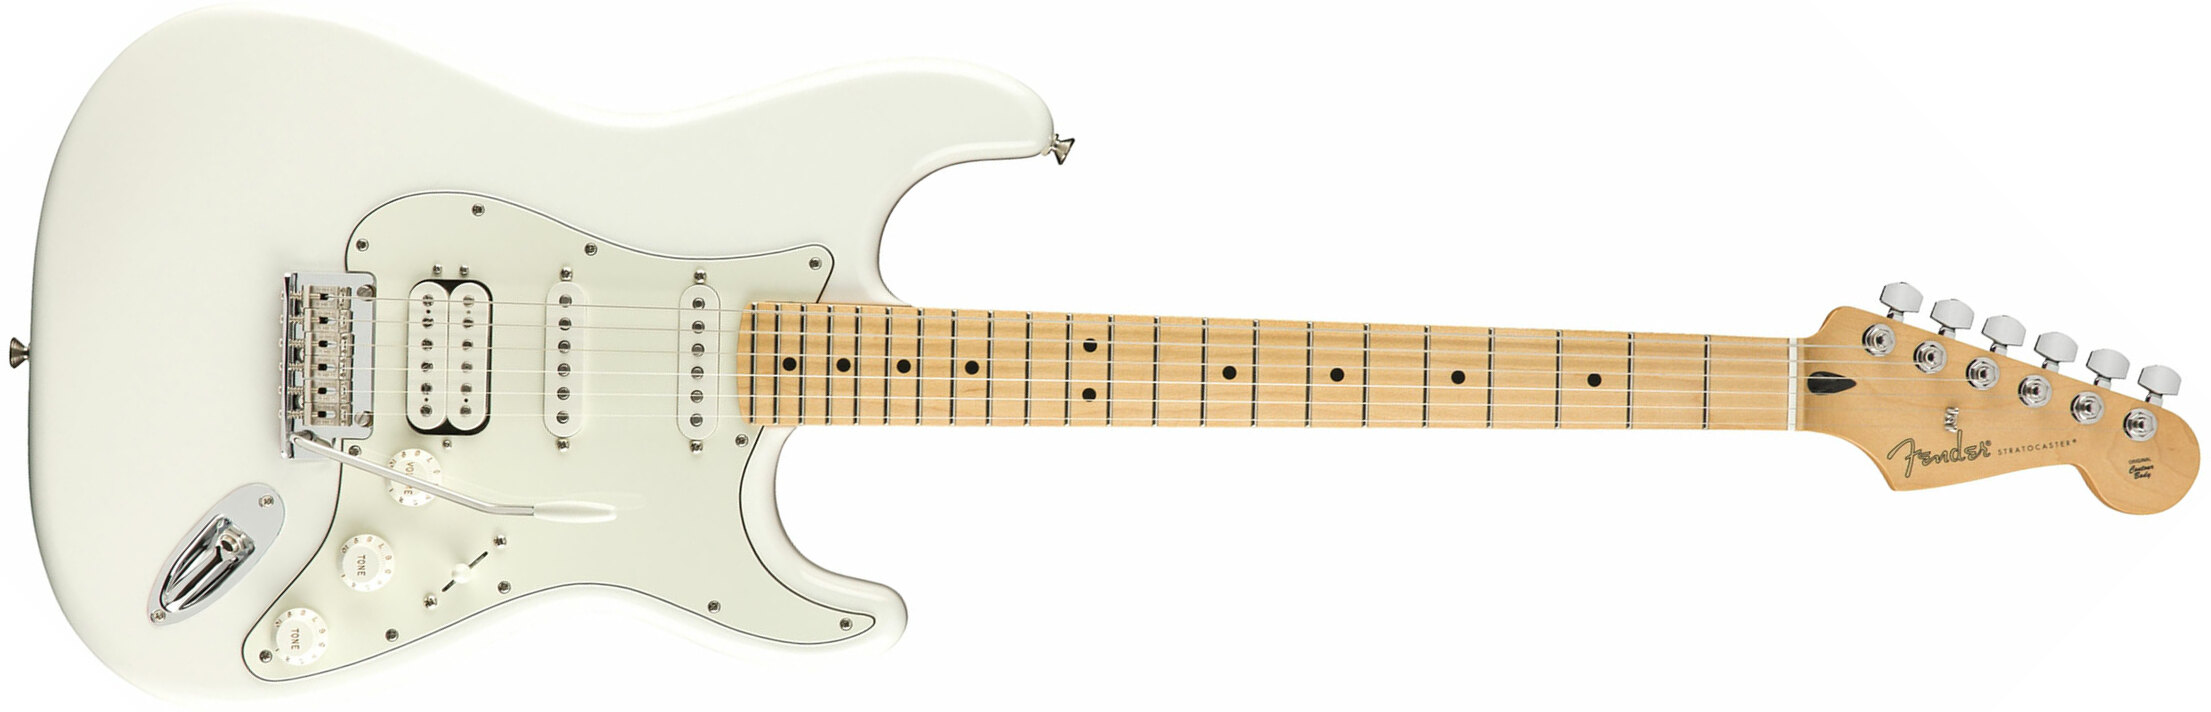 Fender Strat Player Mex Hss Mn - Polar White - Str shape electric guitar - Main picture